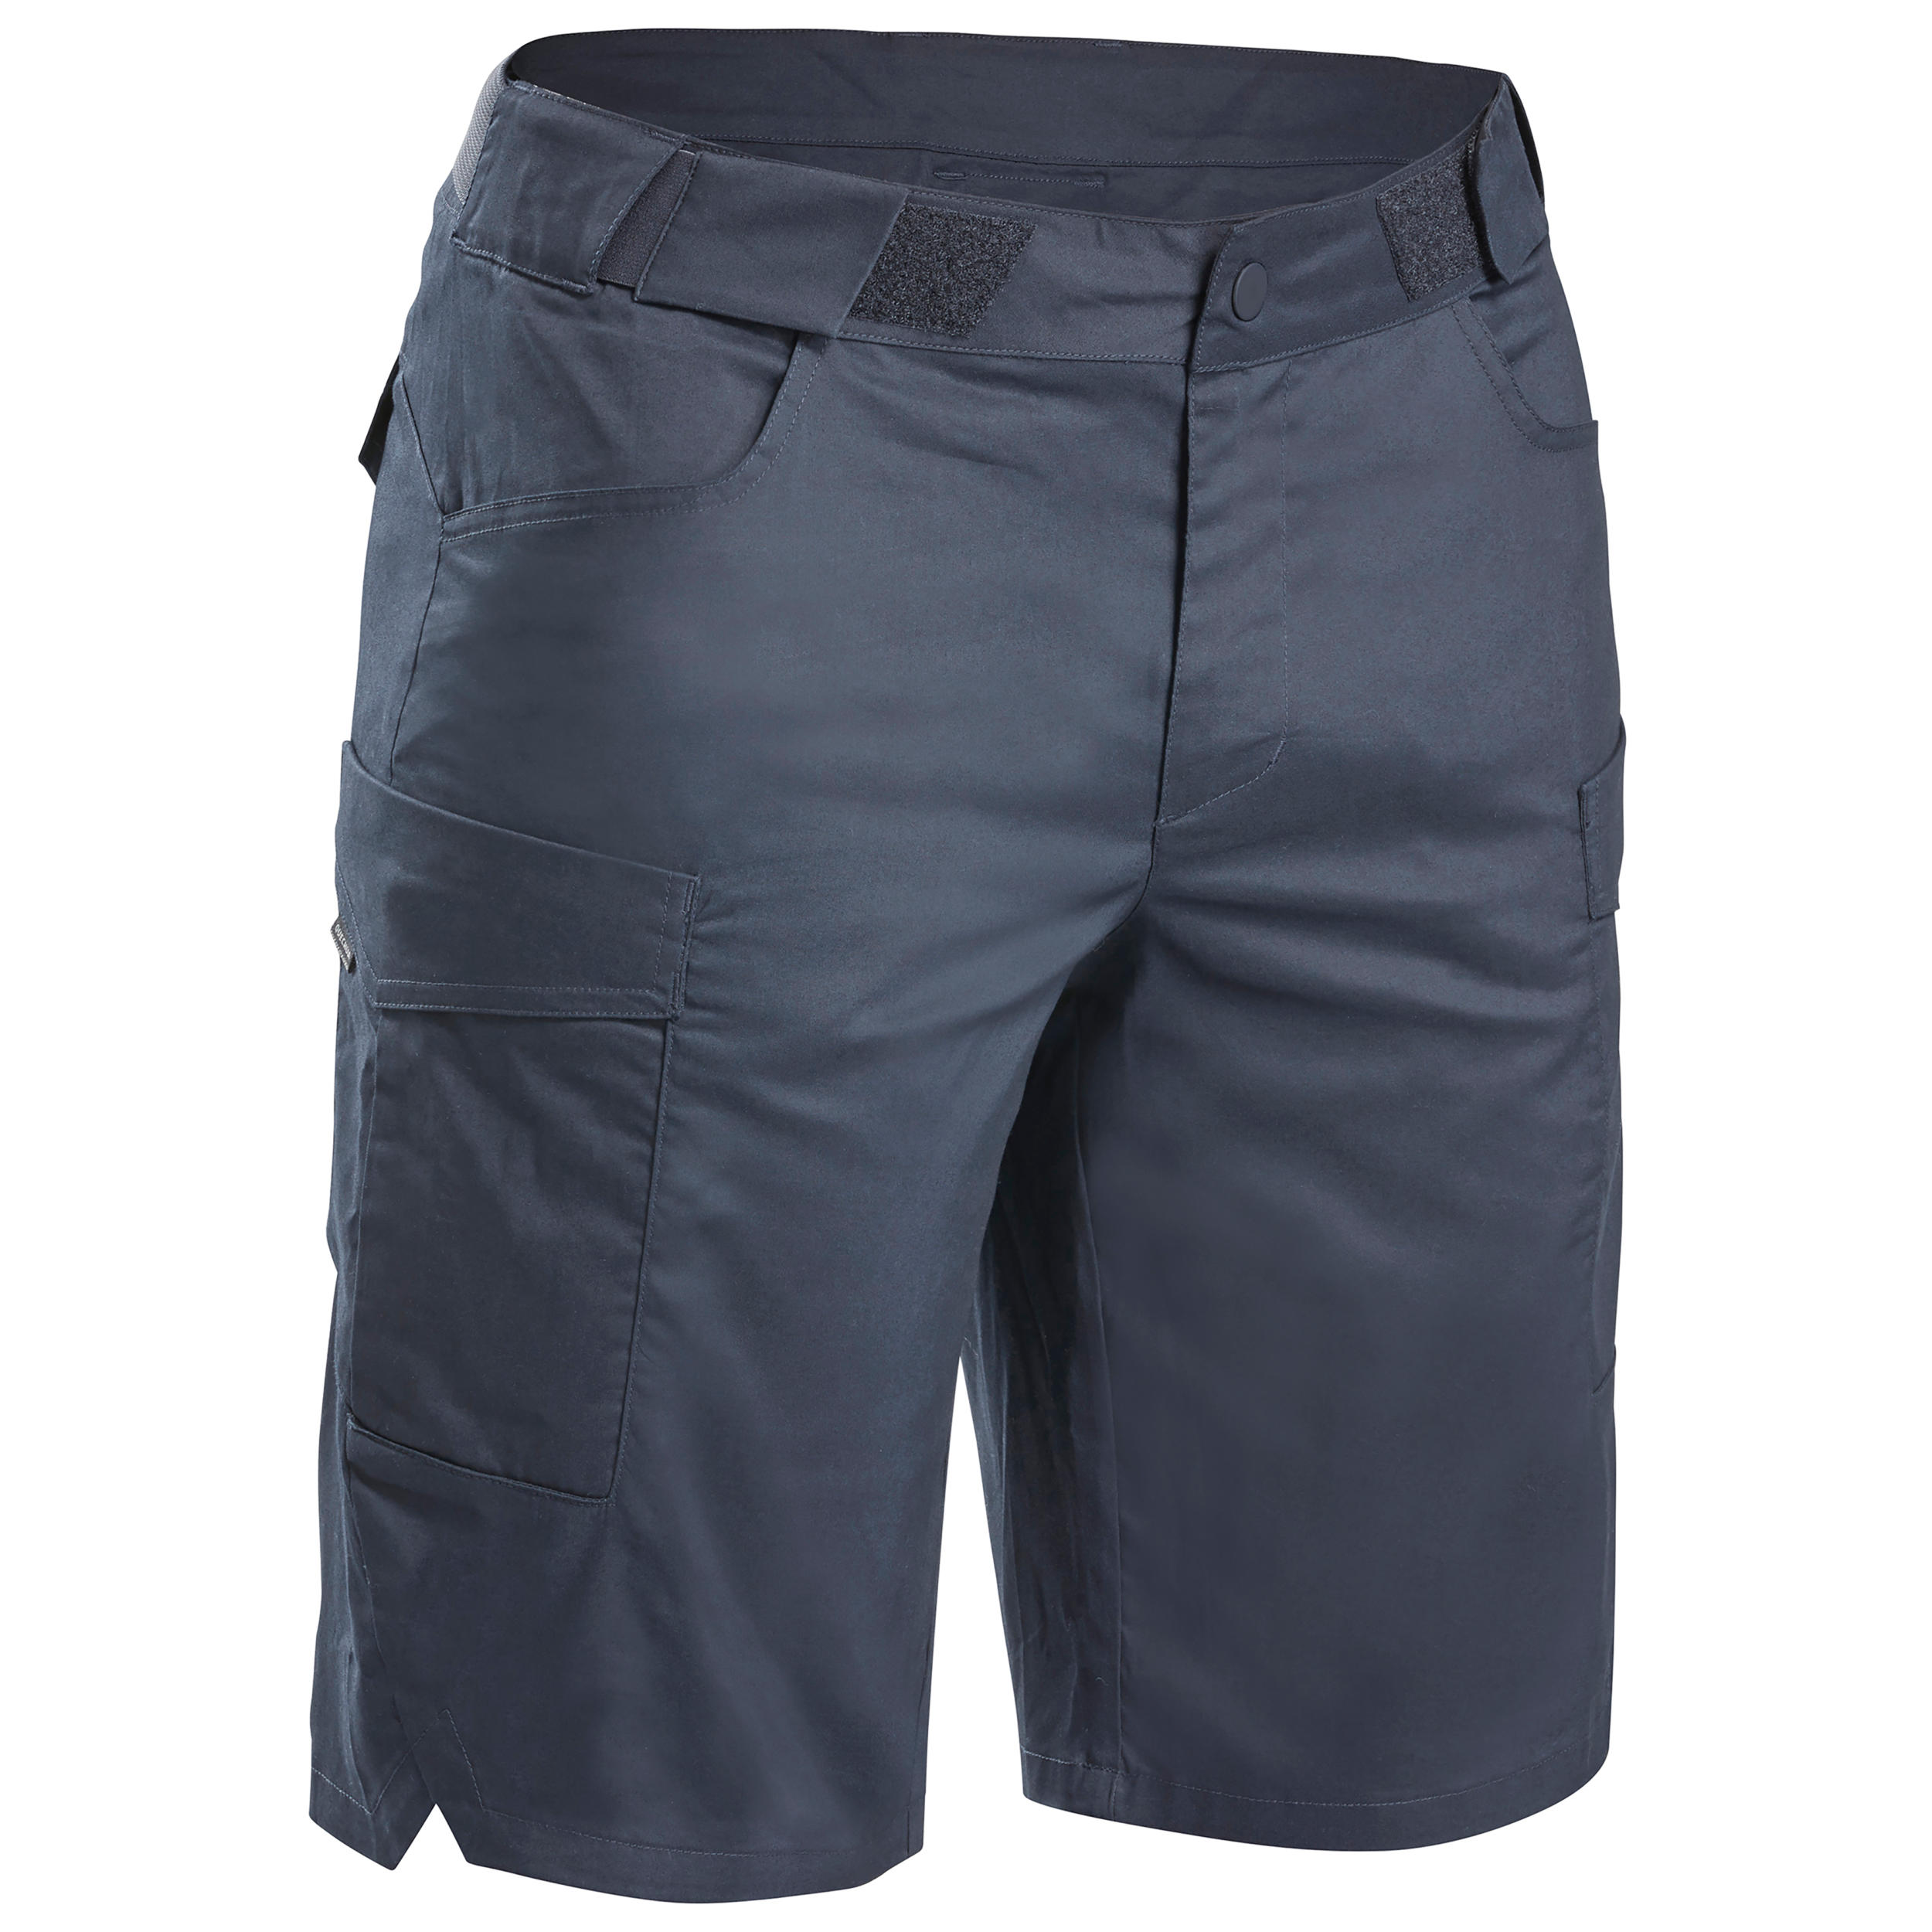 decathlon shorts for men